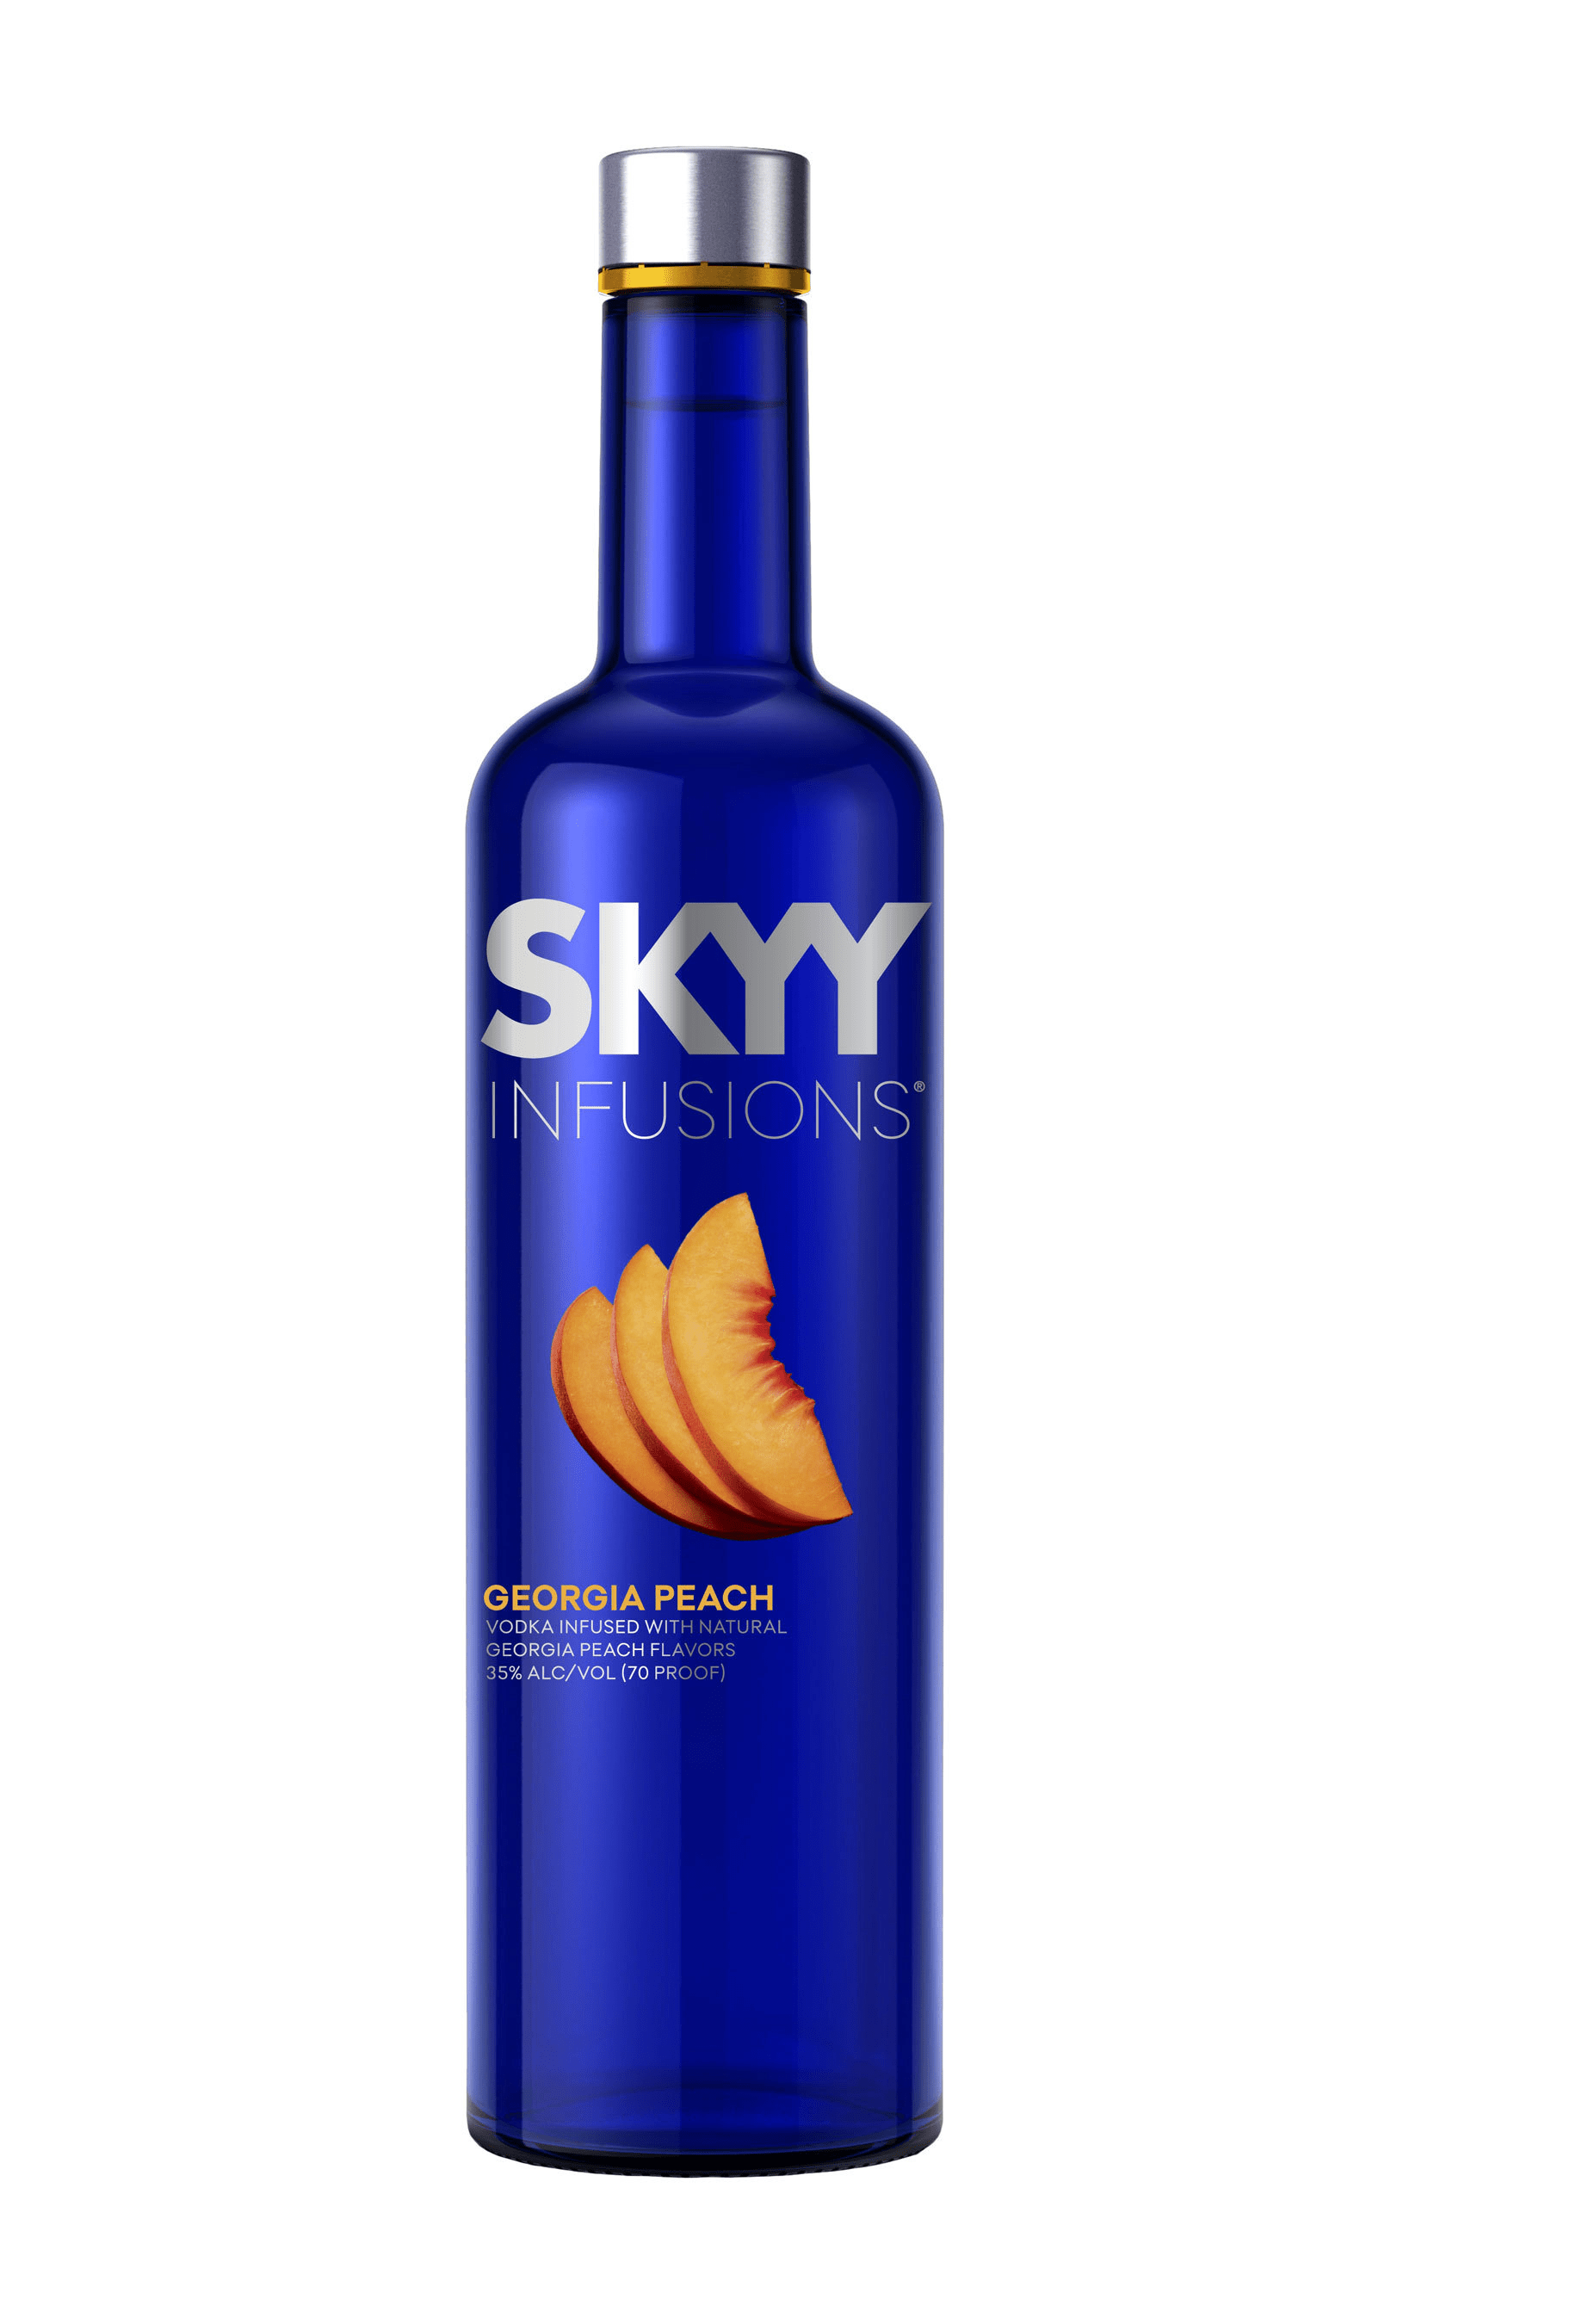 Review: Skyy Infusions Georgia Peach Vodka